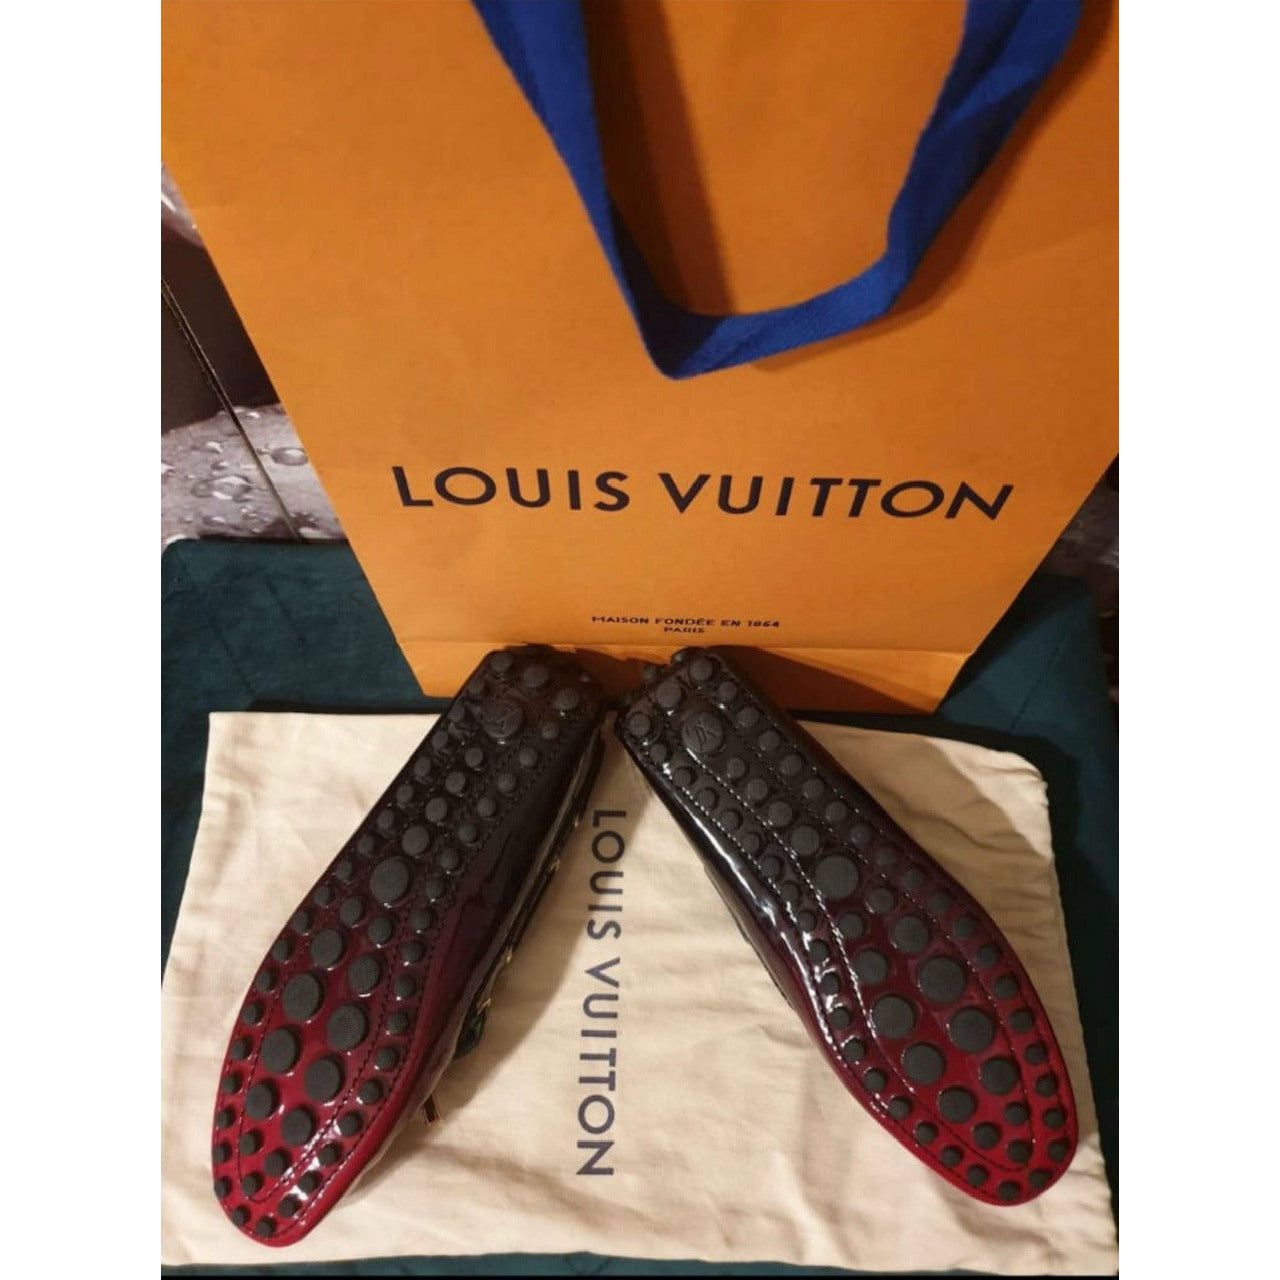 Louis Vuitton Patent leather moccasins size 36